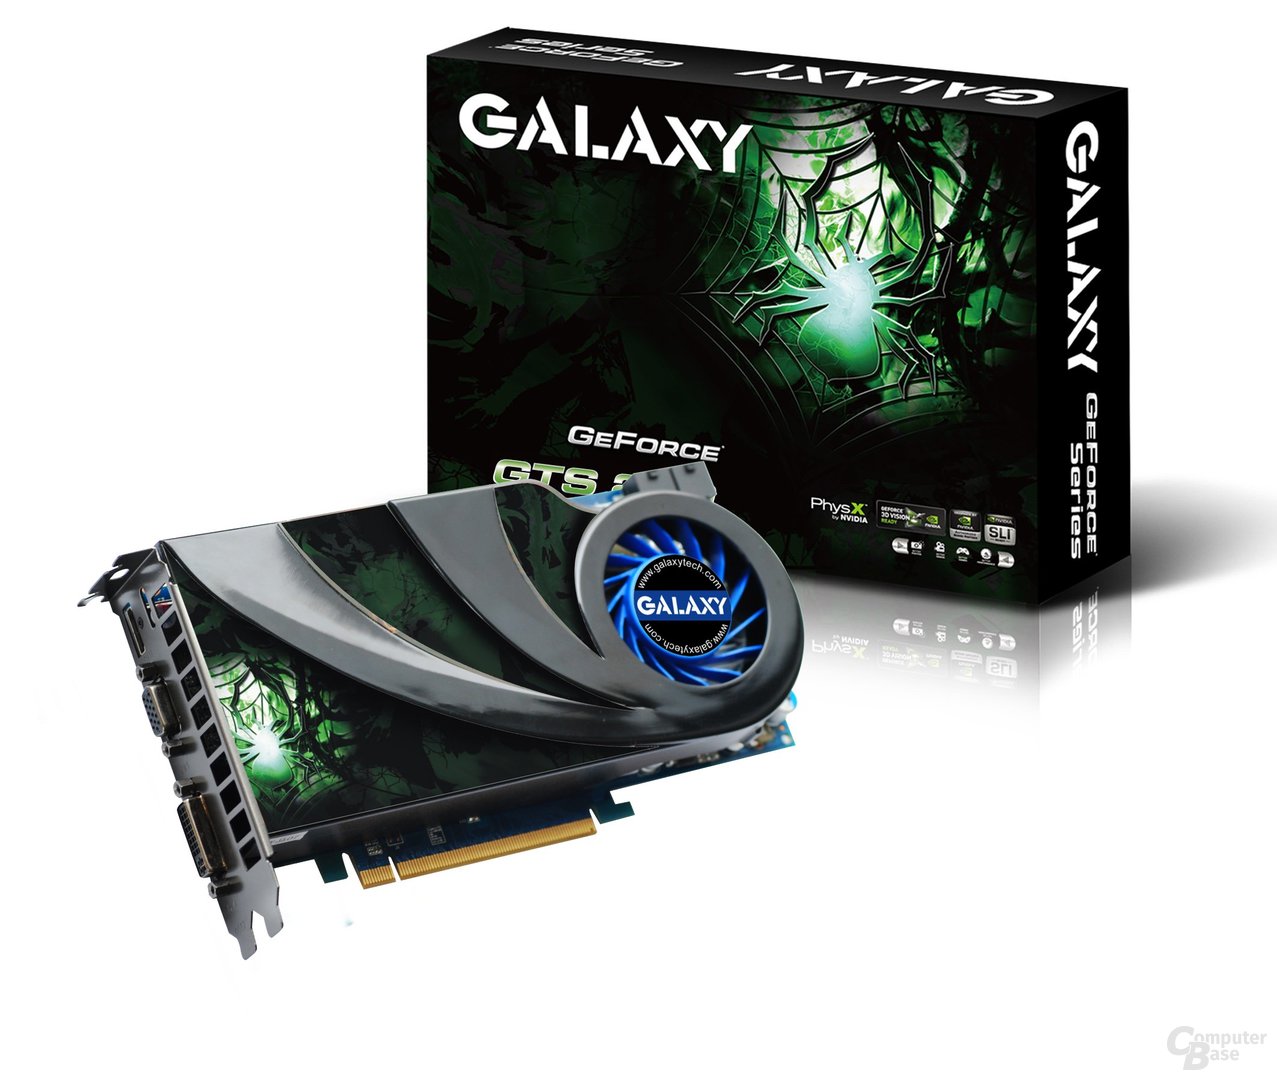 Galaxy GeForce GTX 250